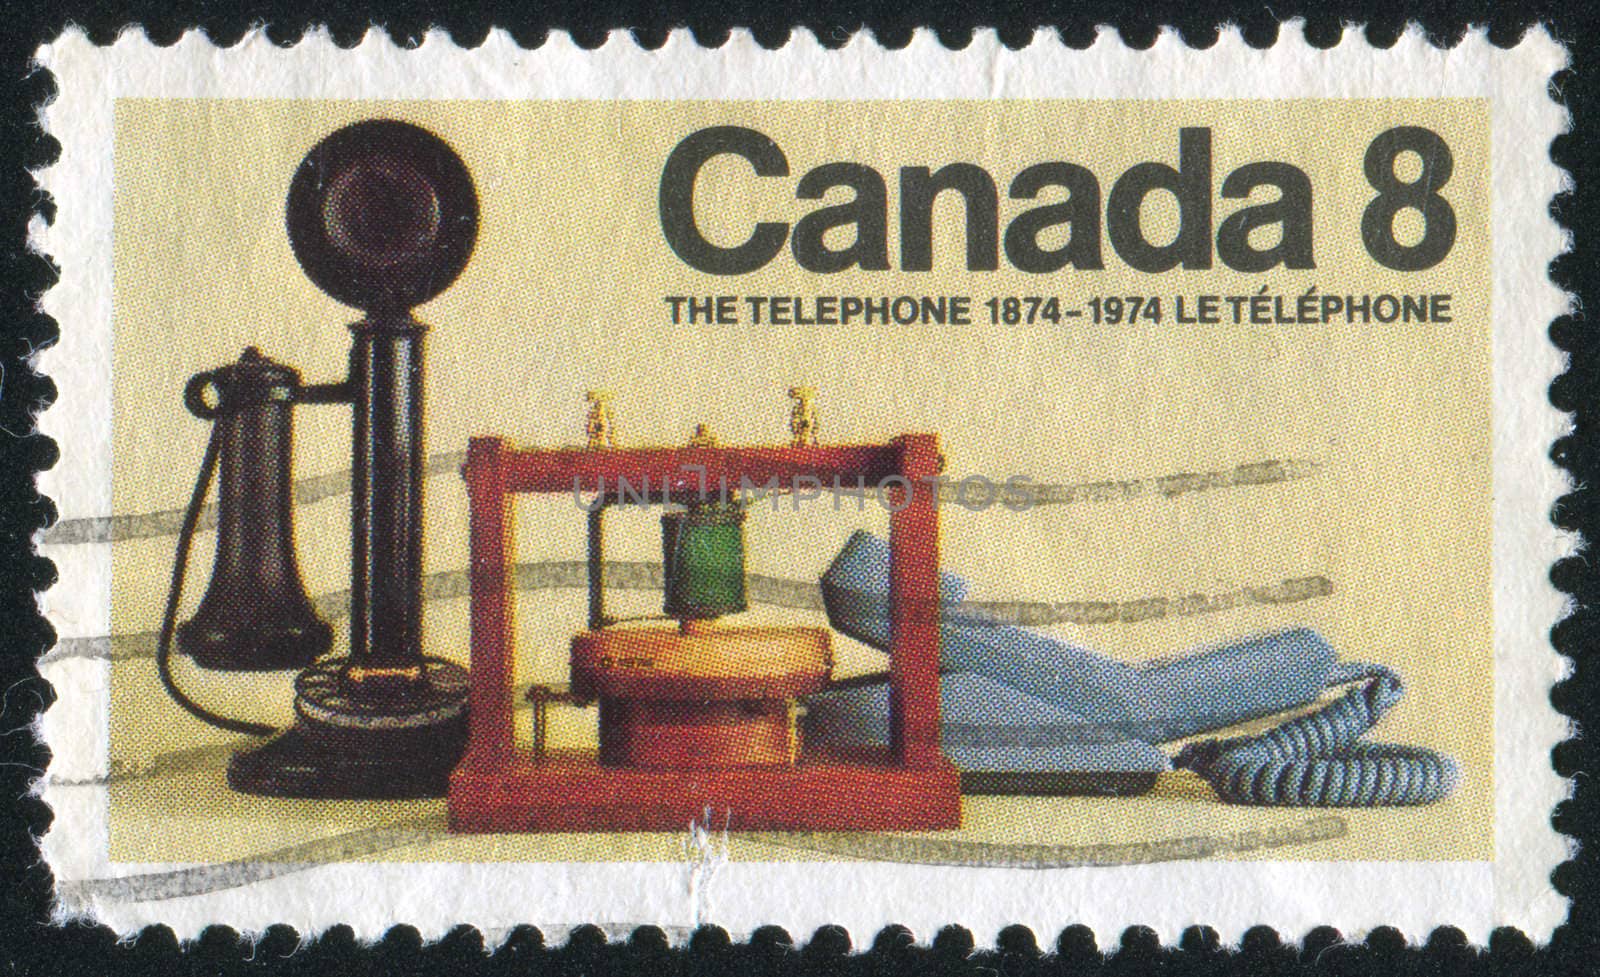 CANADA - CIRCA 1974: stamp printed by Canada, shows Telephones, circa 1974